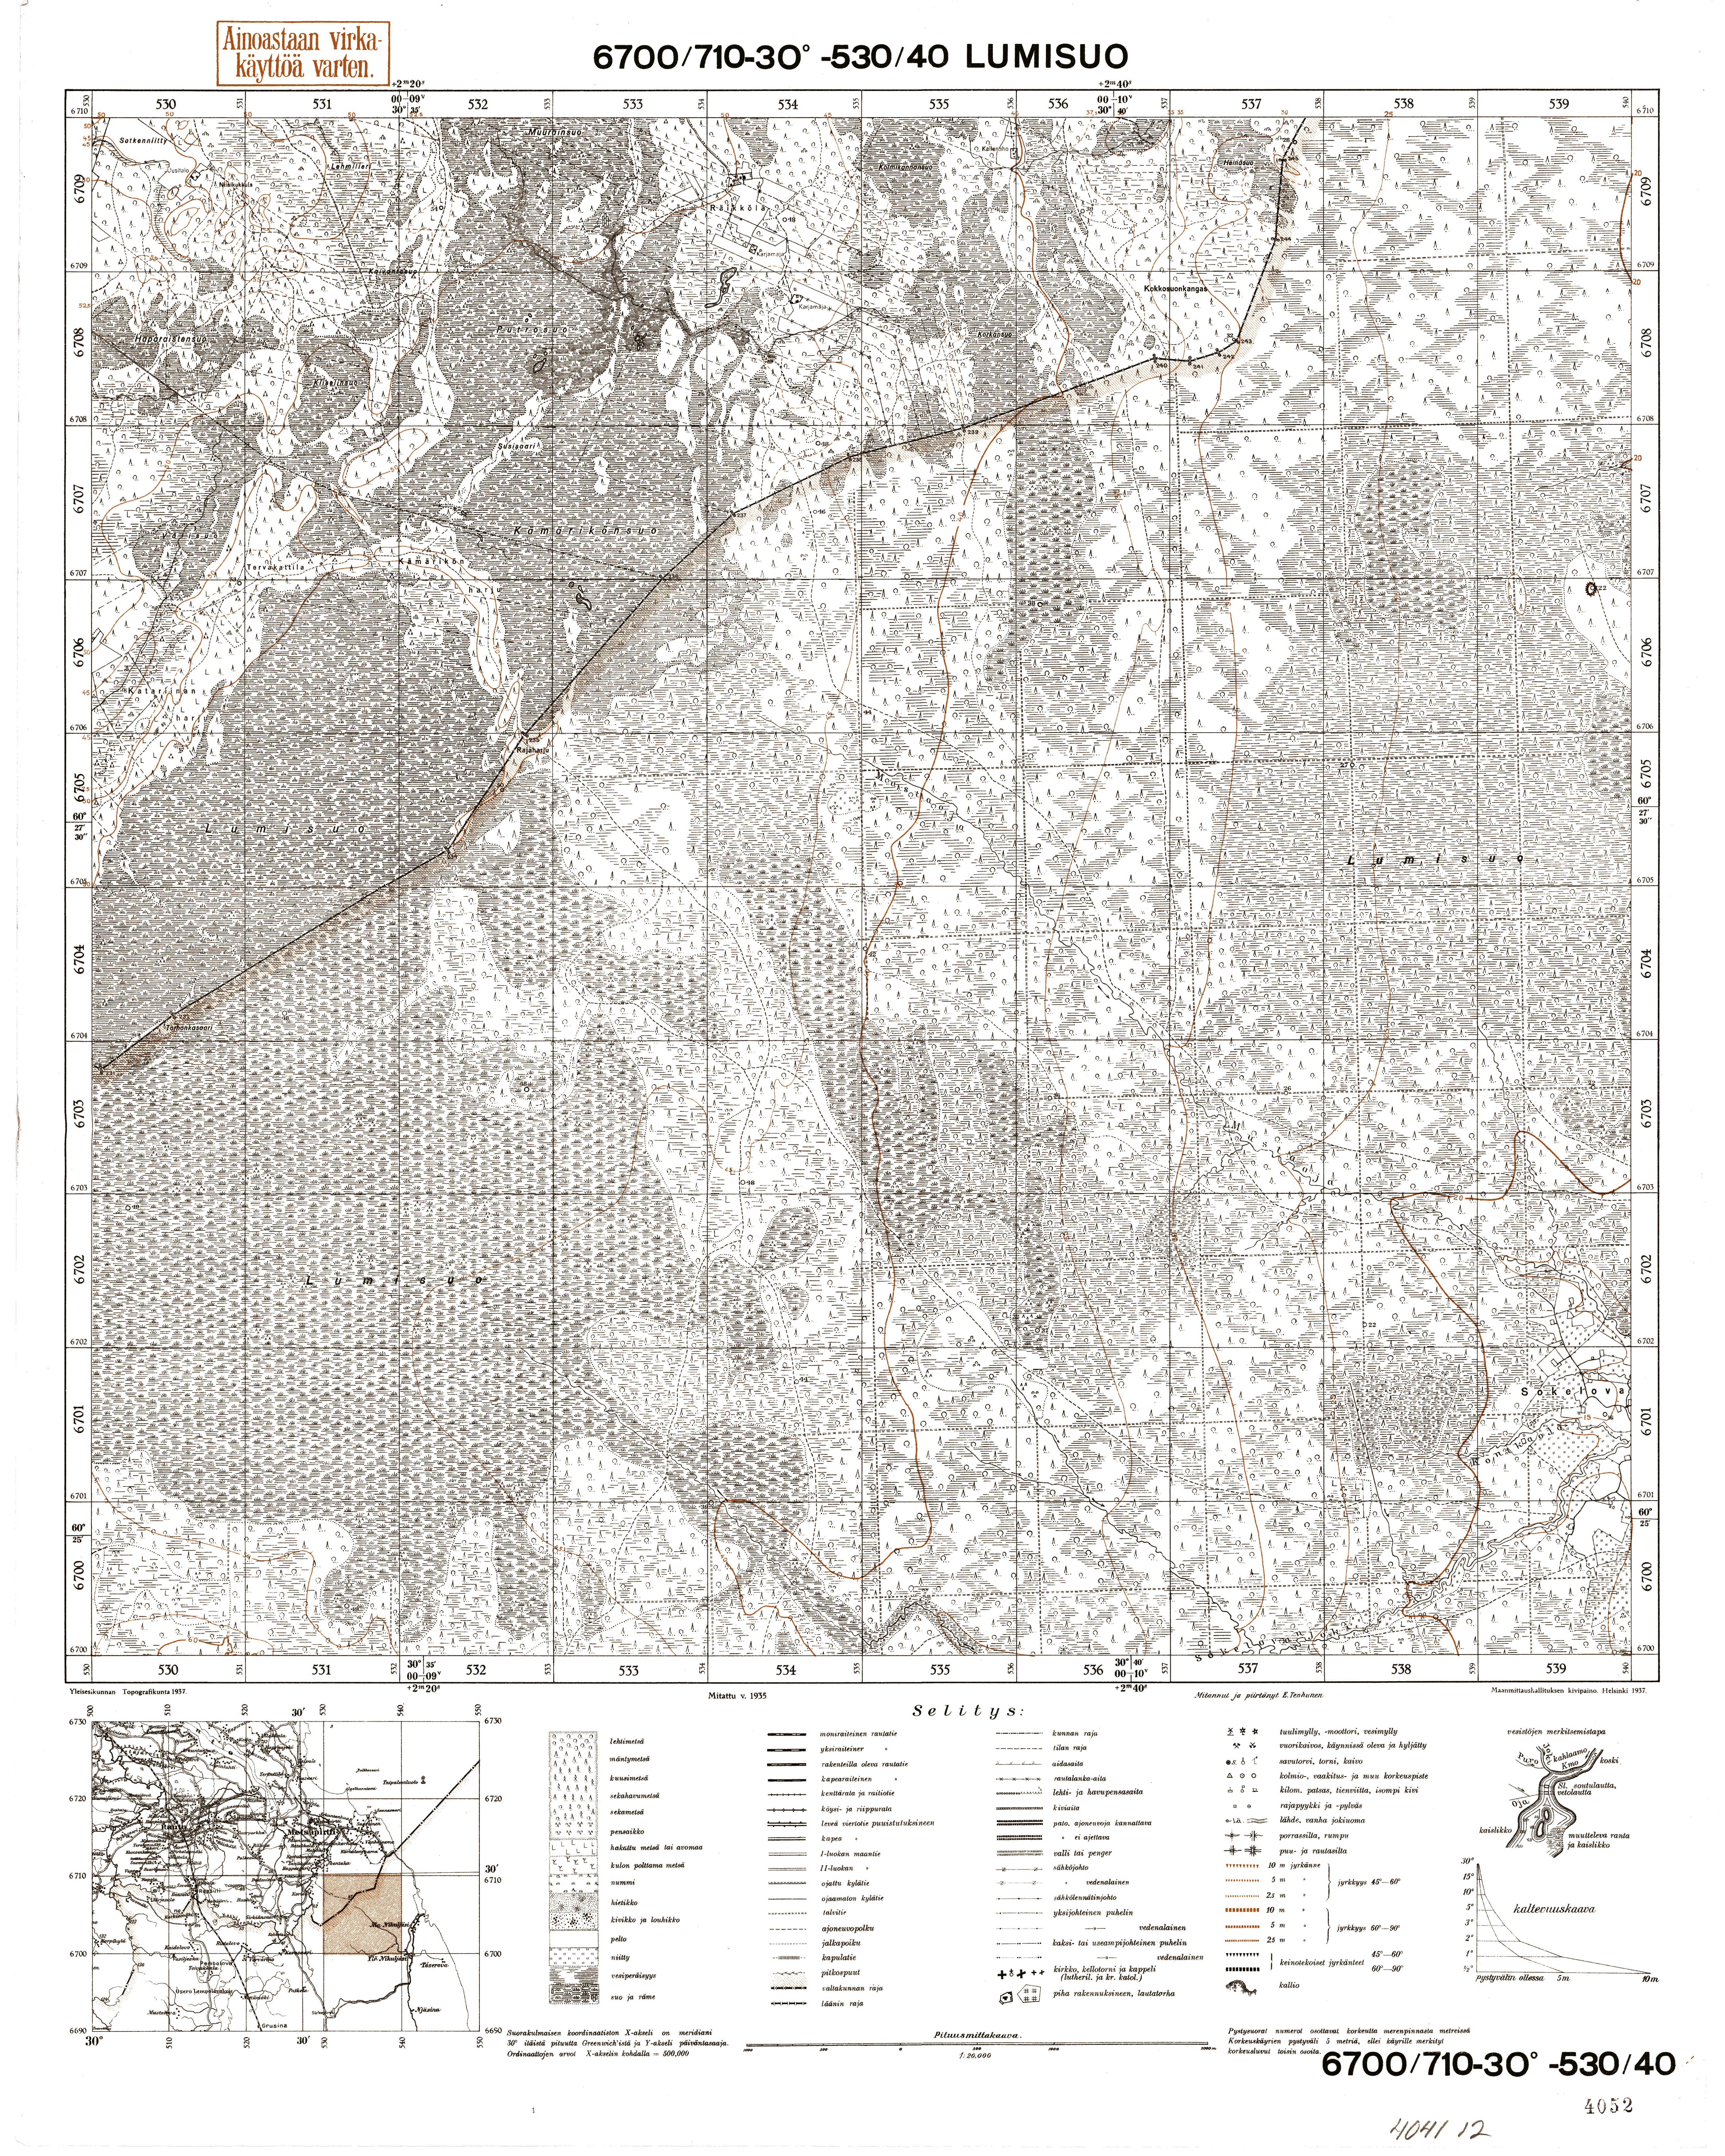 Neodolimoje Marshes. Lumisuo. Topografikartta 404112. Topographic map from 1942